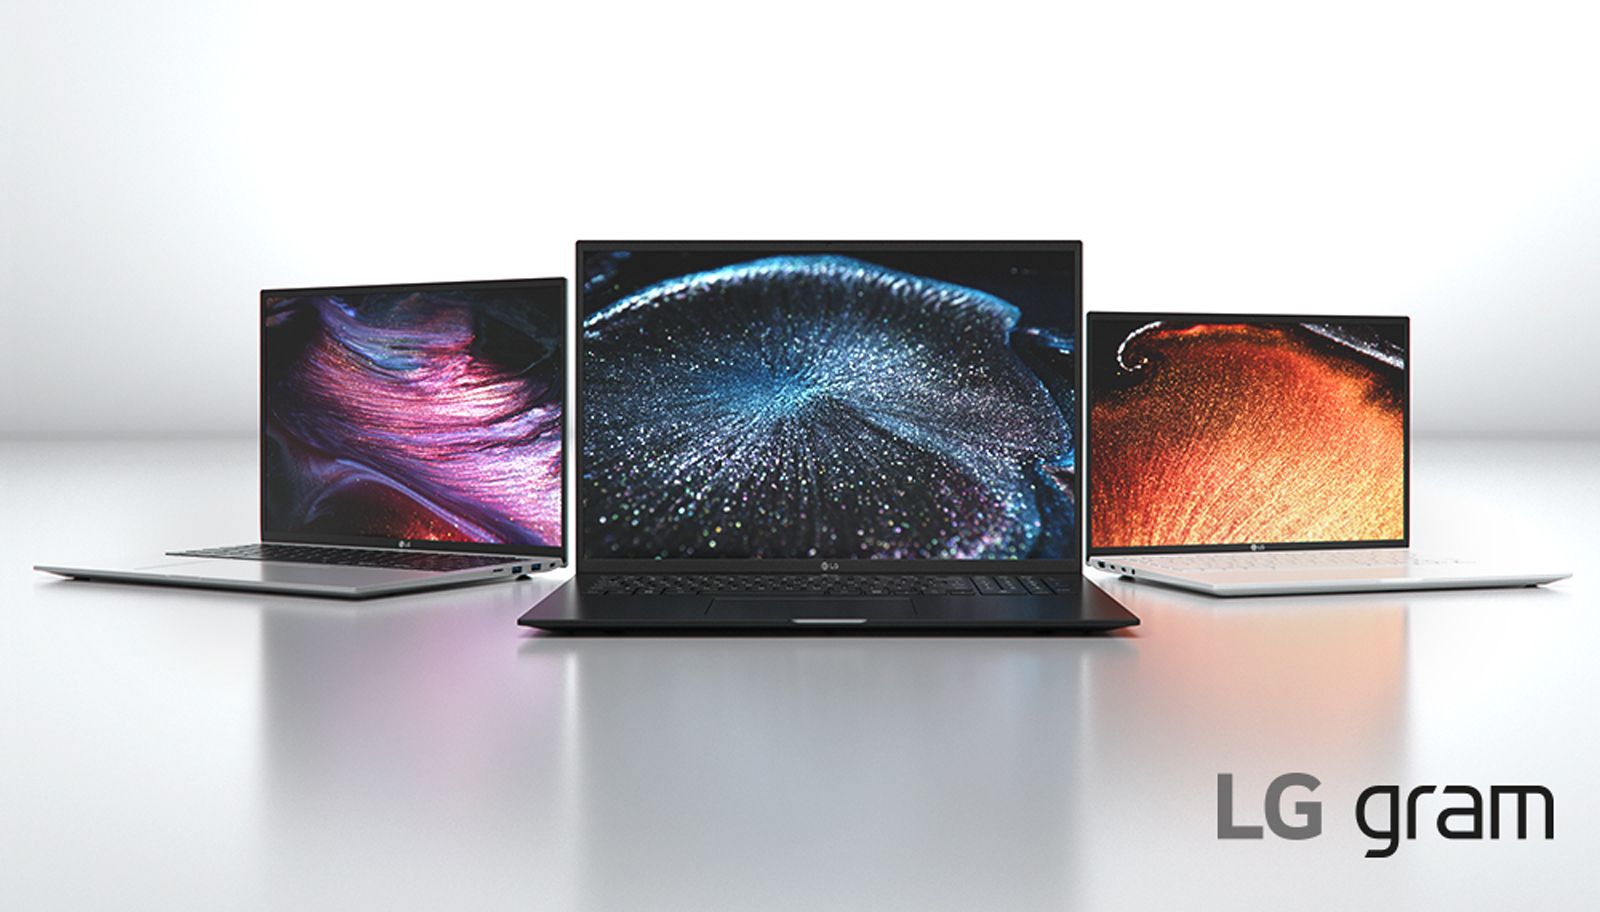 LG's latest ultra-light Gram laptops have 16:10 screens photo 2